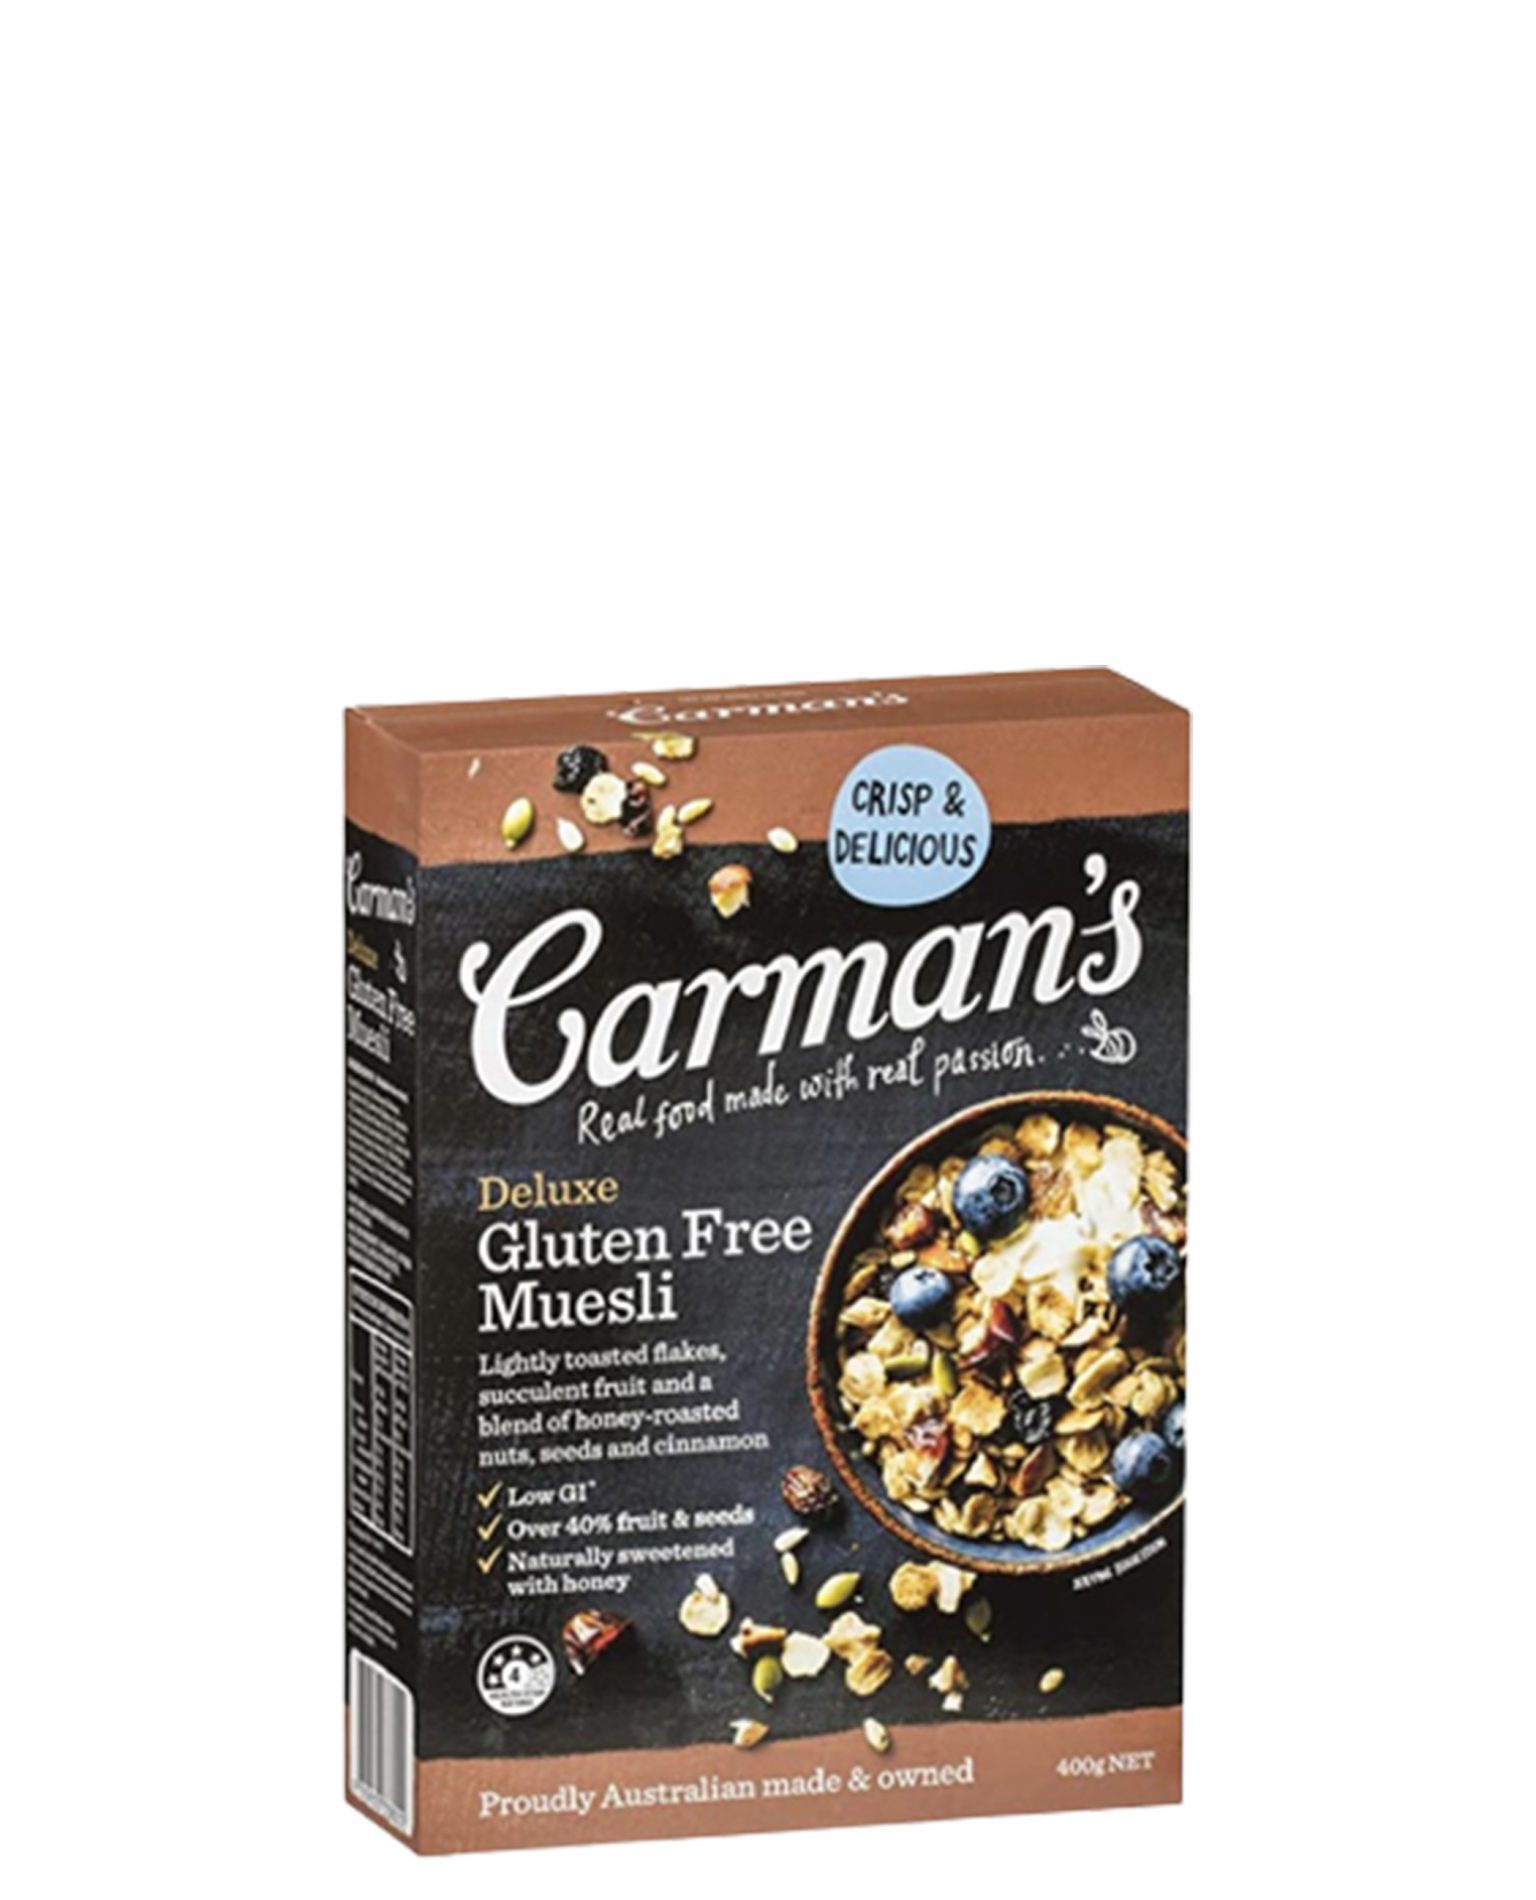 Carman's Deluxe Gluten Free Muesli main image